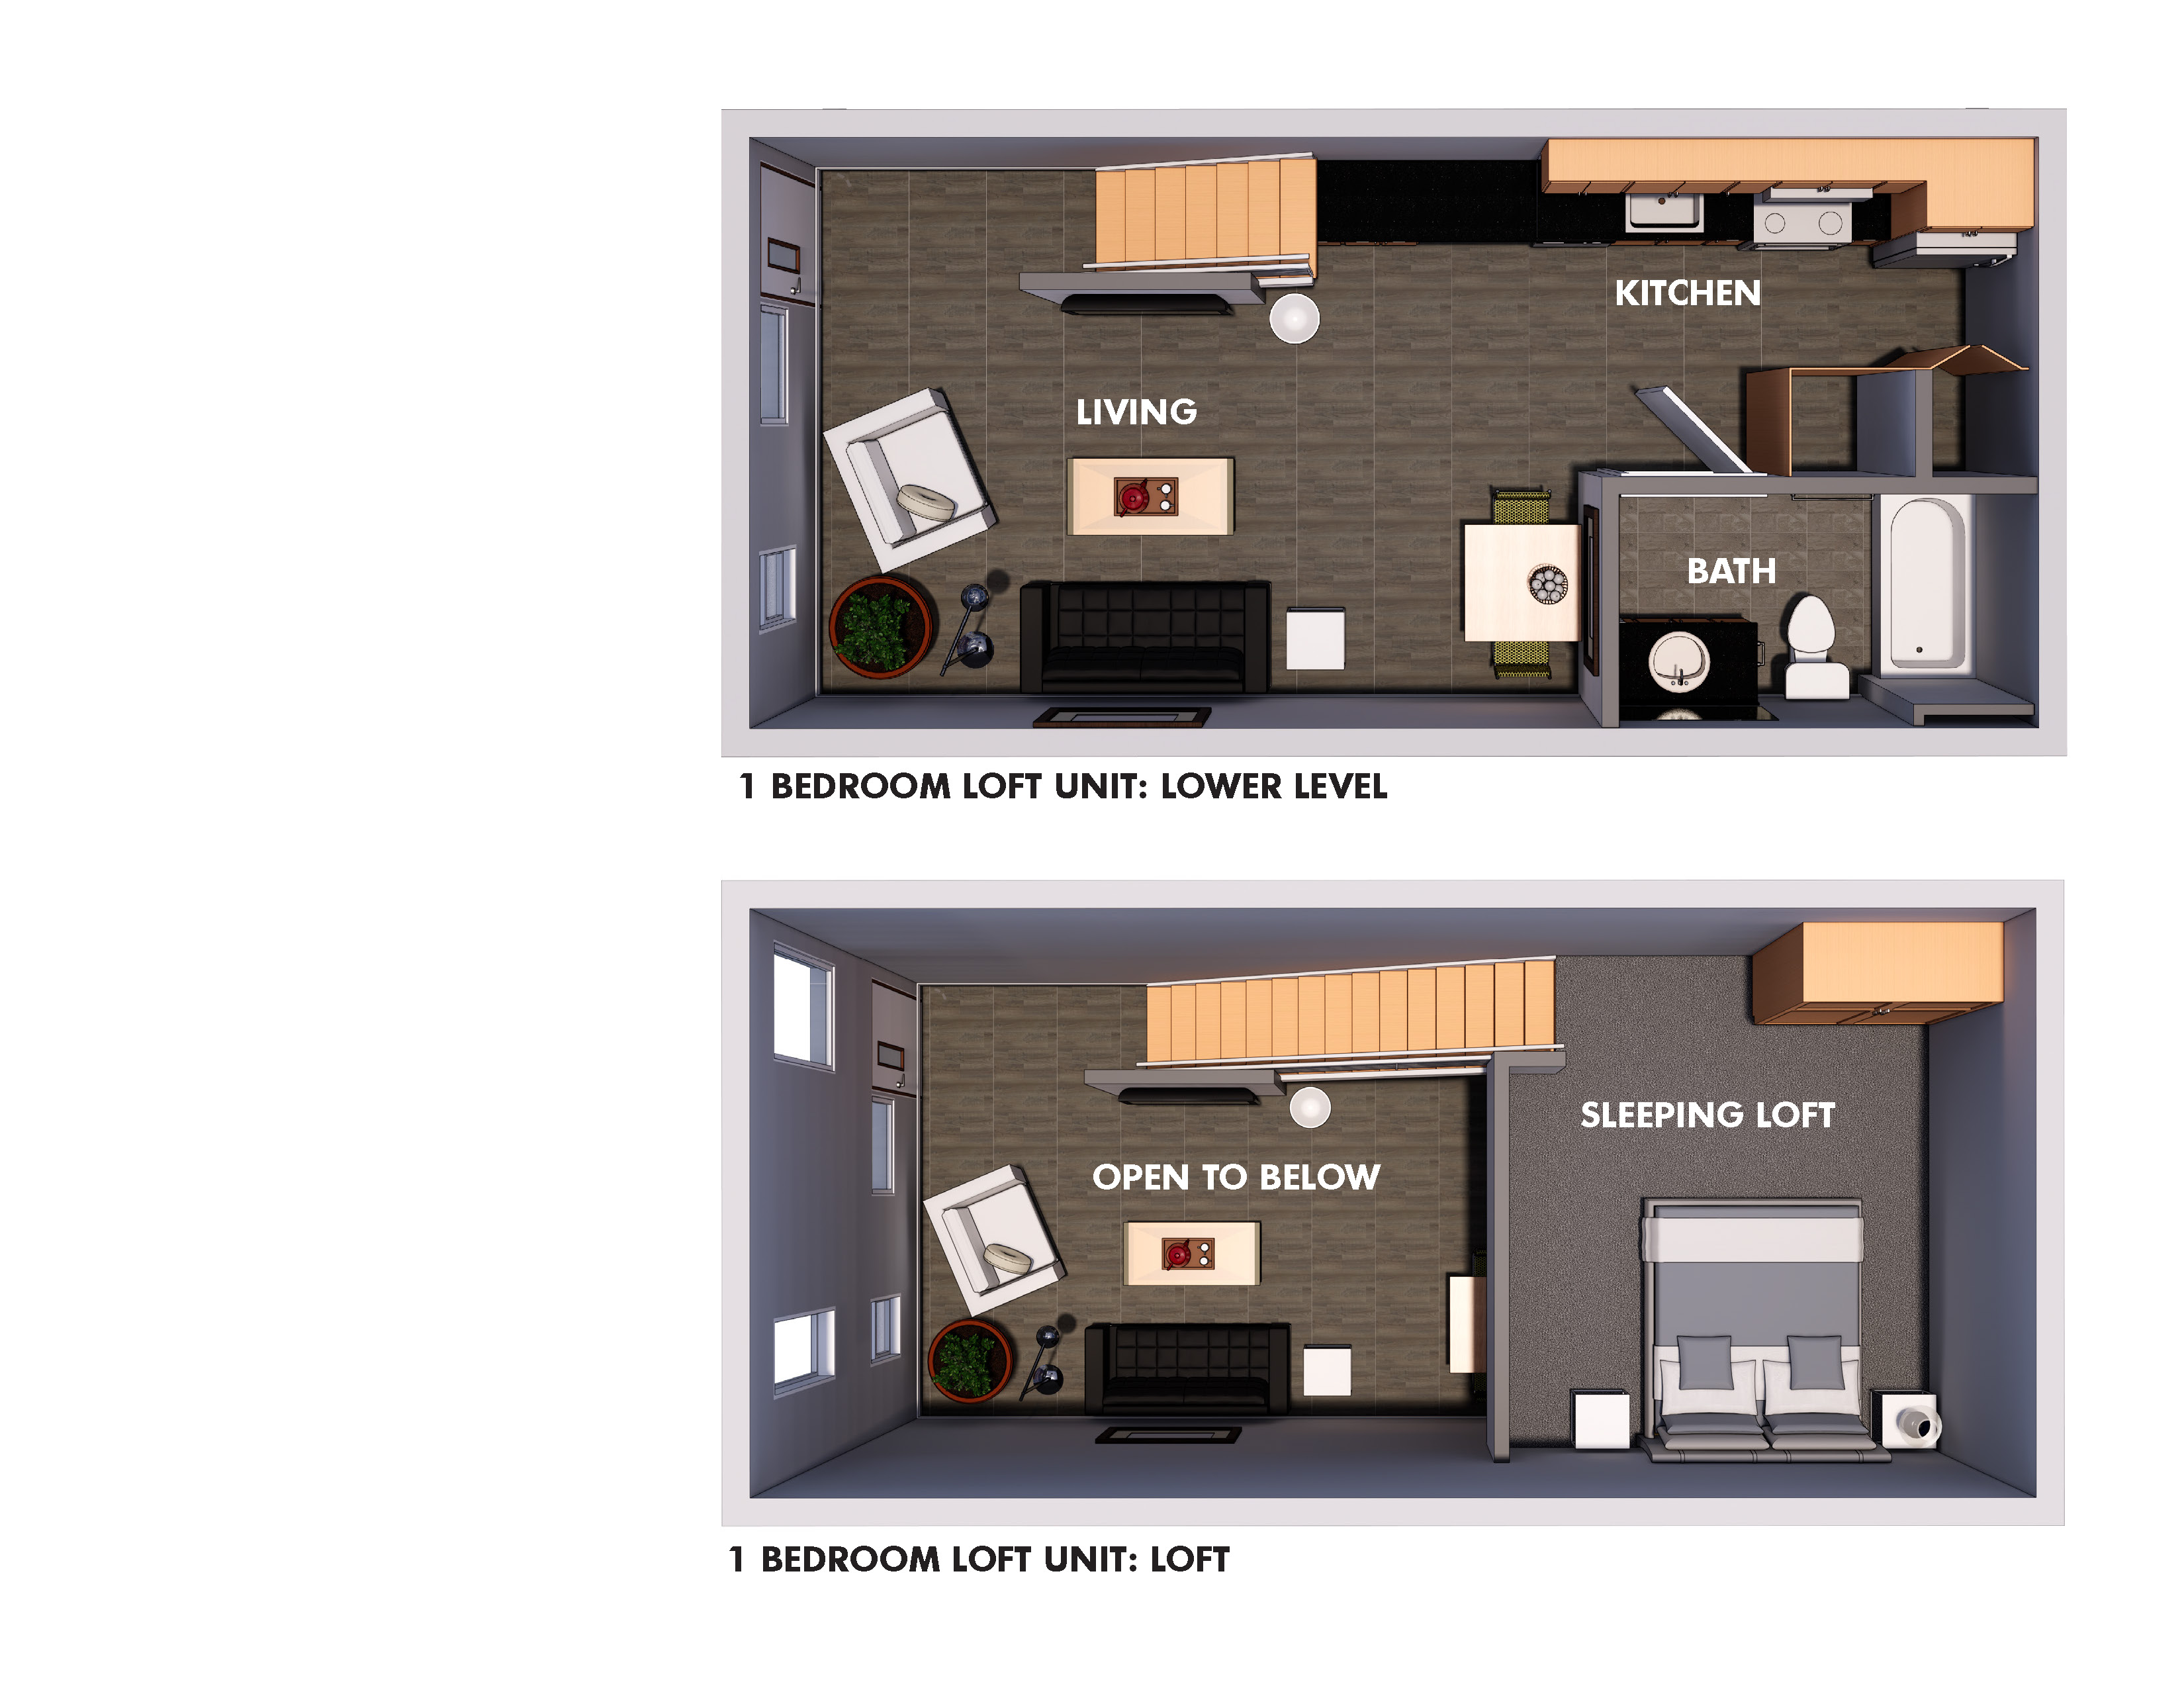 1 Bedroom loft layout